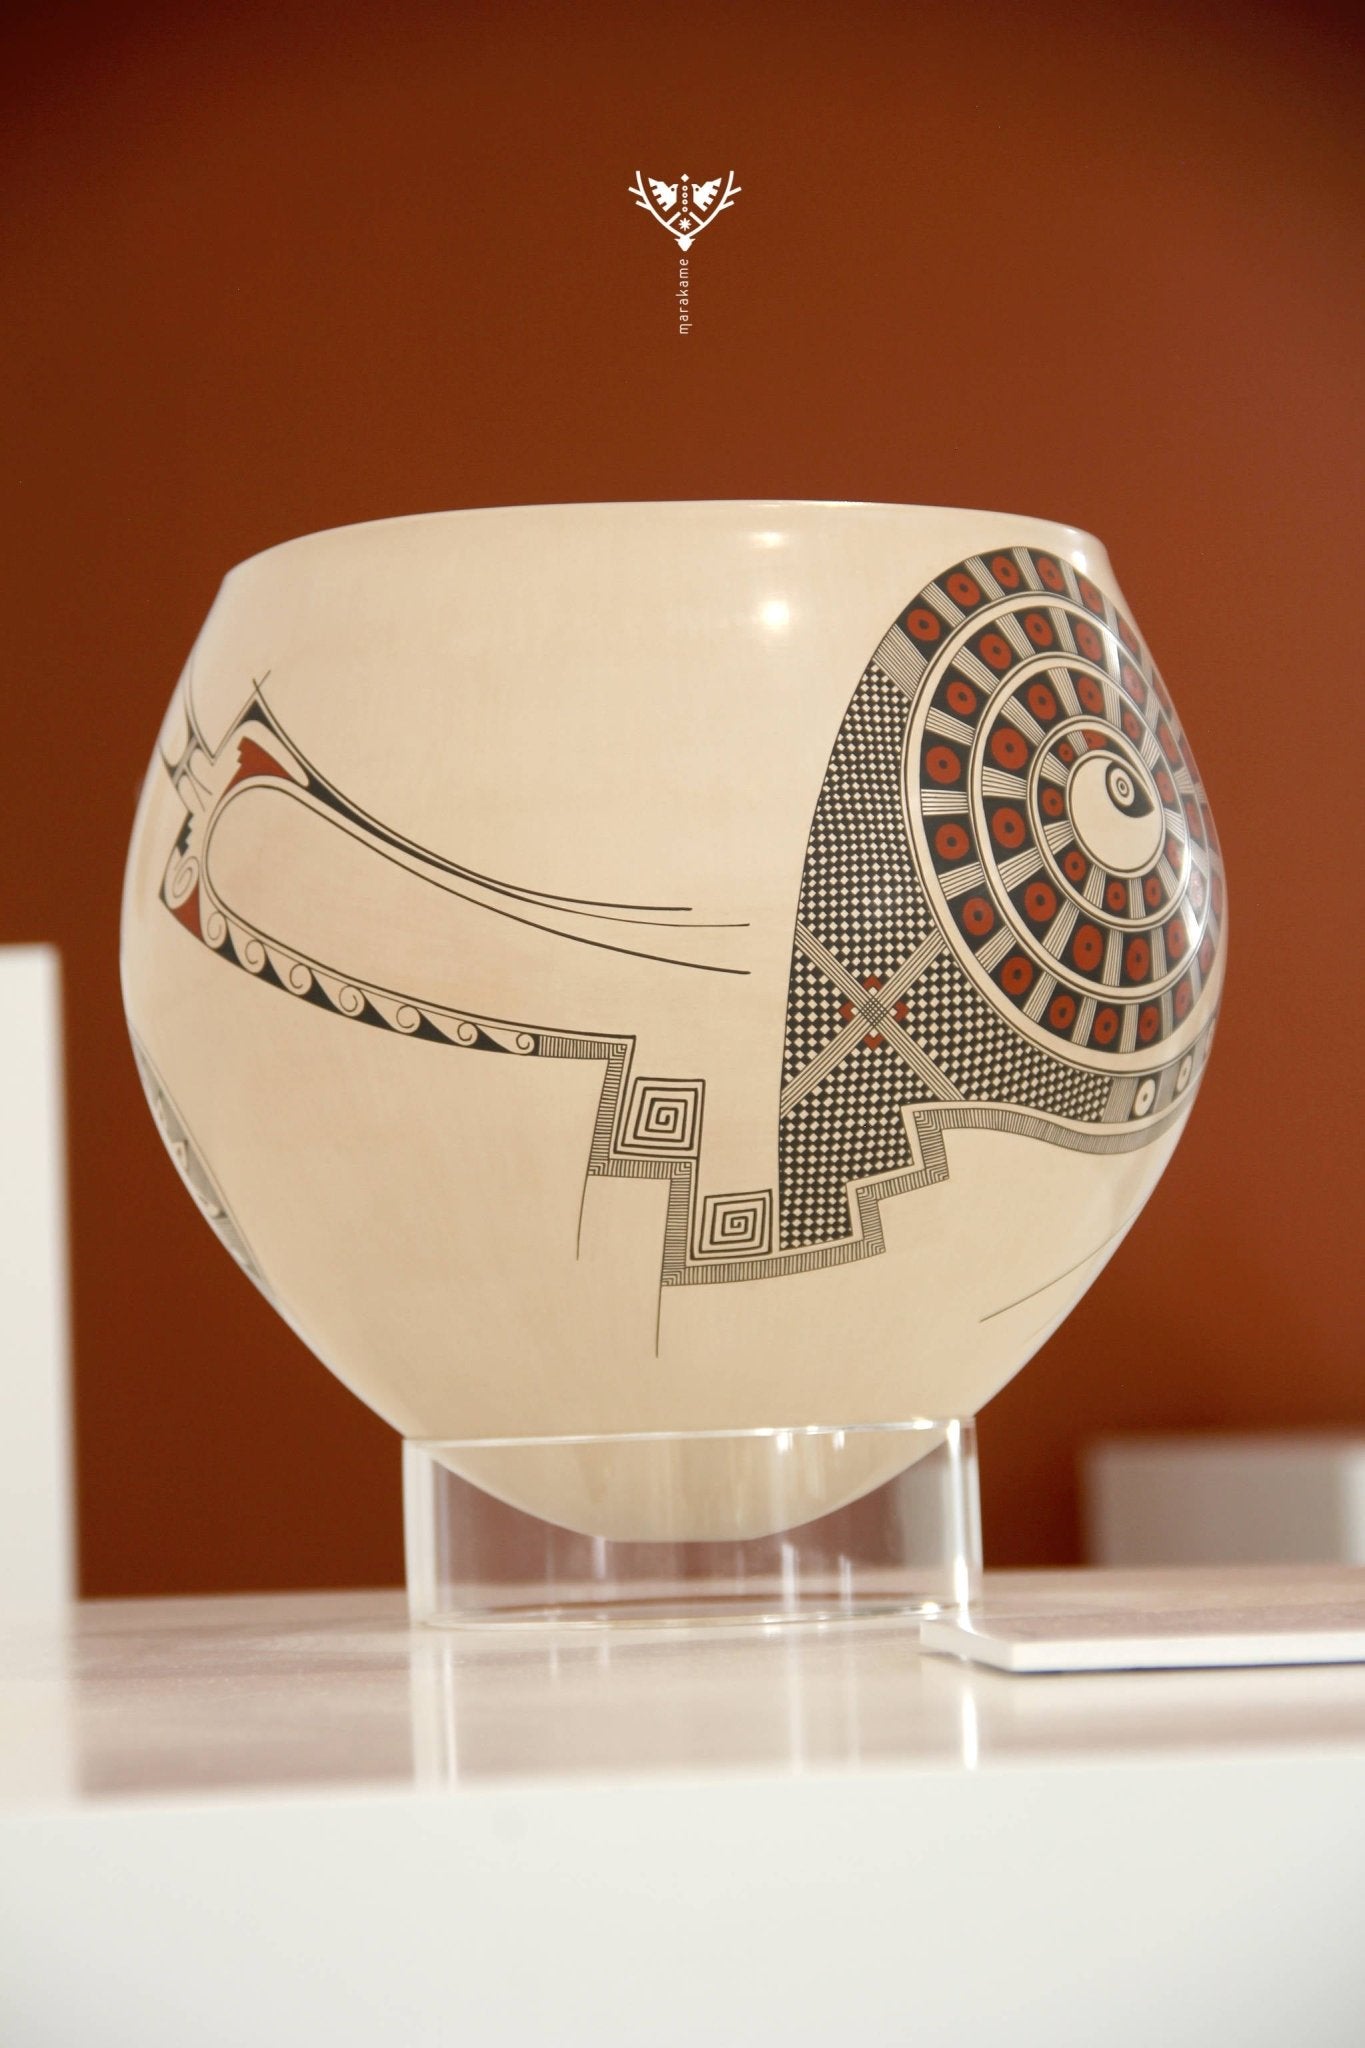 Mata Ortiz Keramik – Das Coralillo und die Schwalbe – Diego Valles – Huichol Art – Marakame